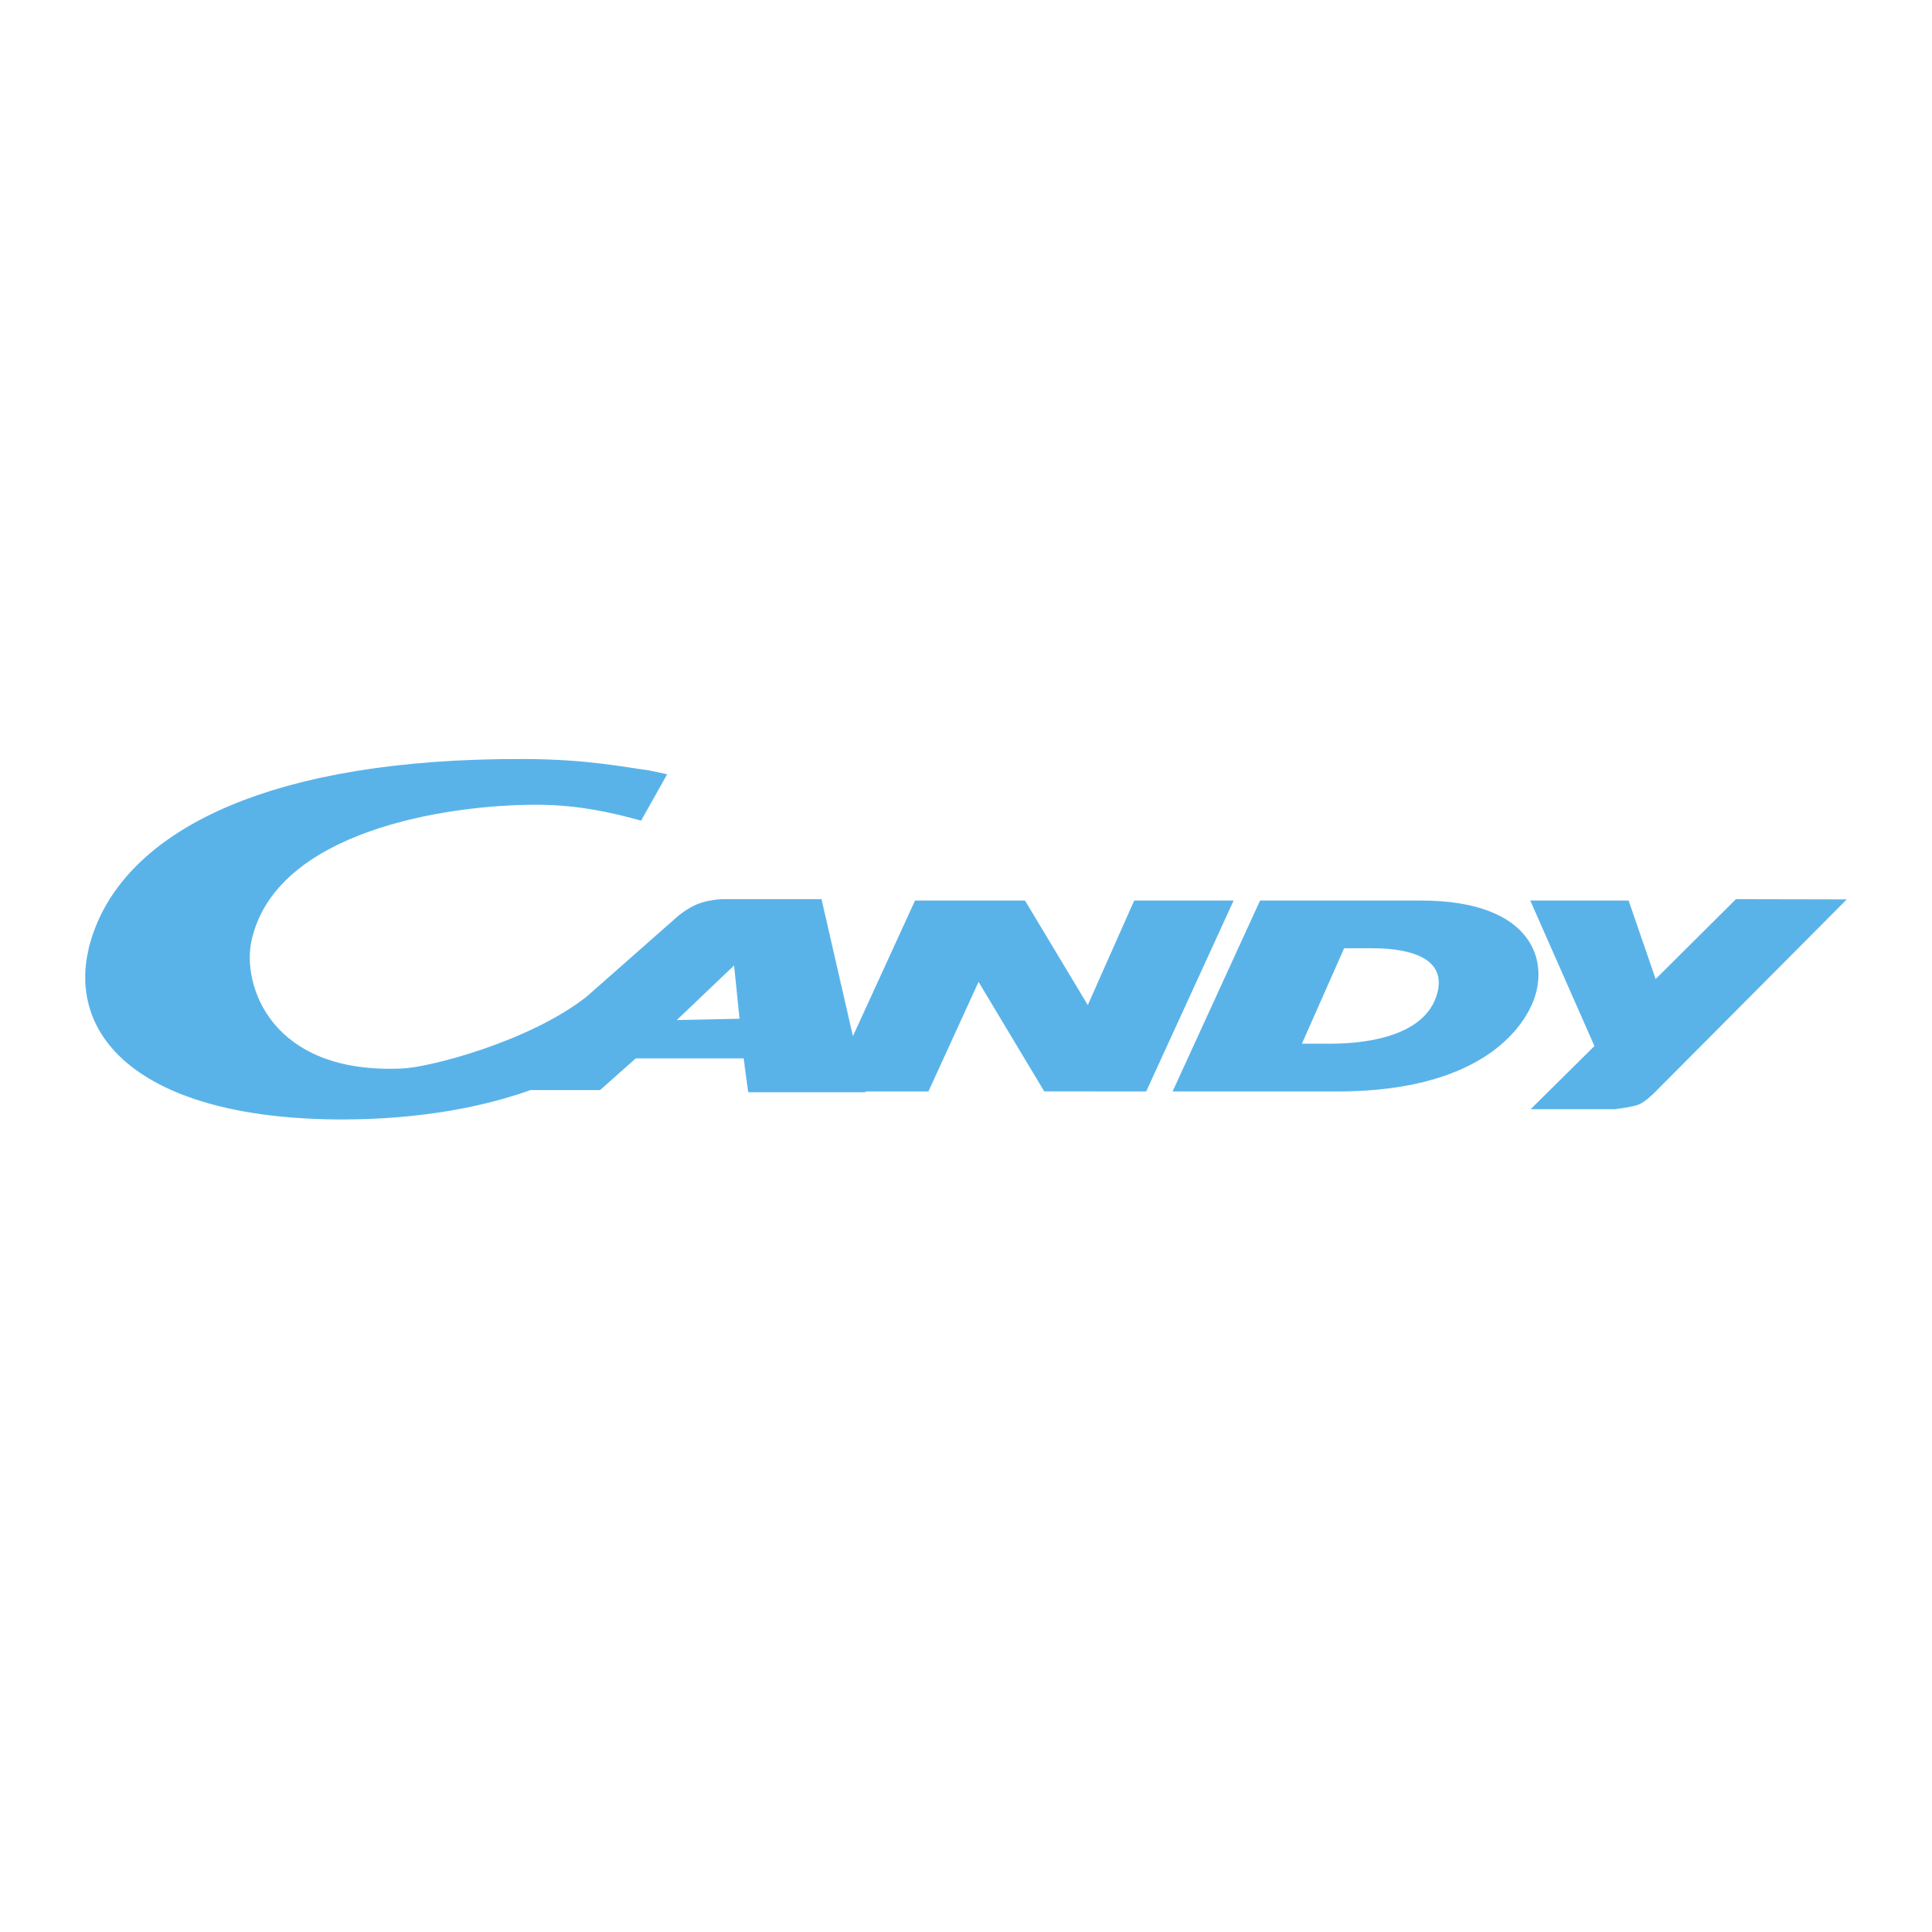 Candy Logo - Candy Logo PNG Transparent & SVG Vector